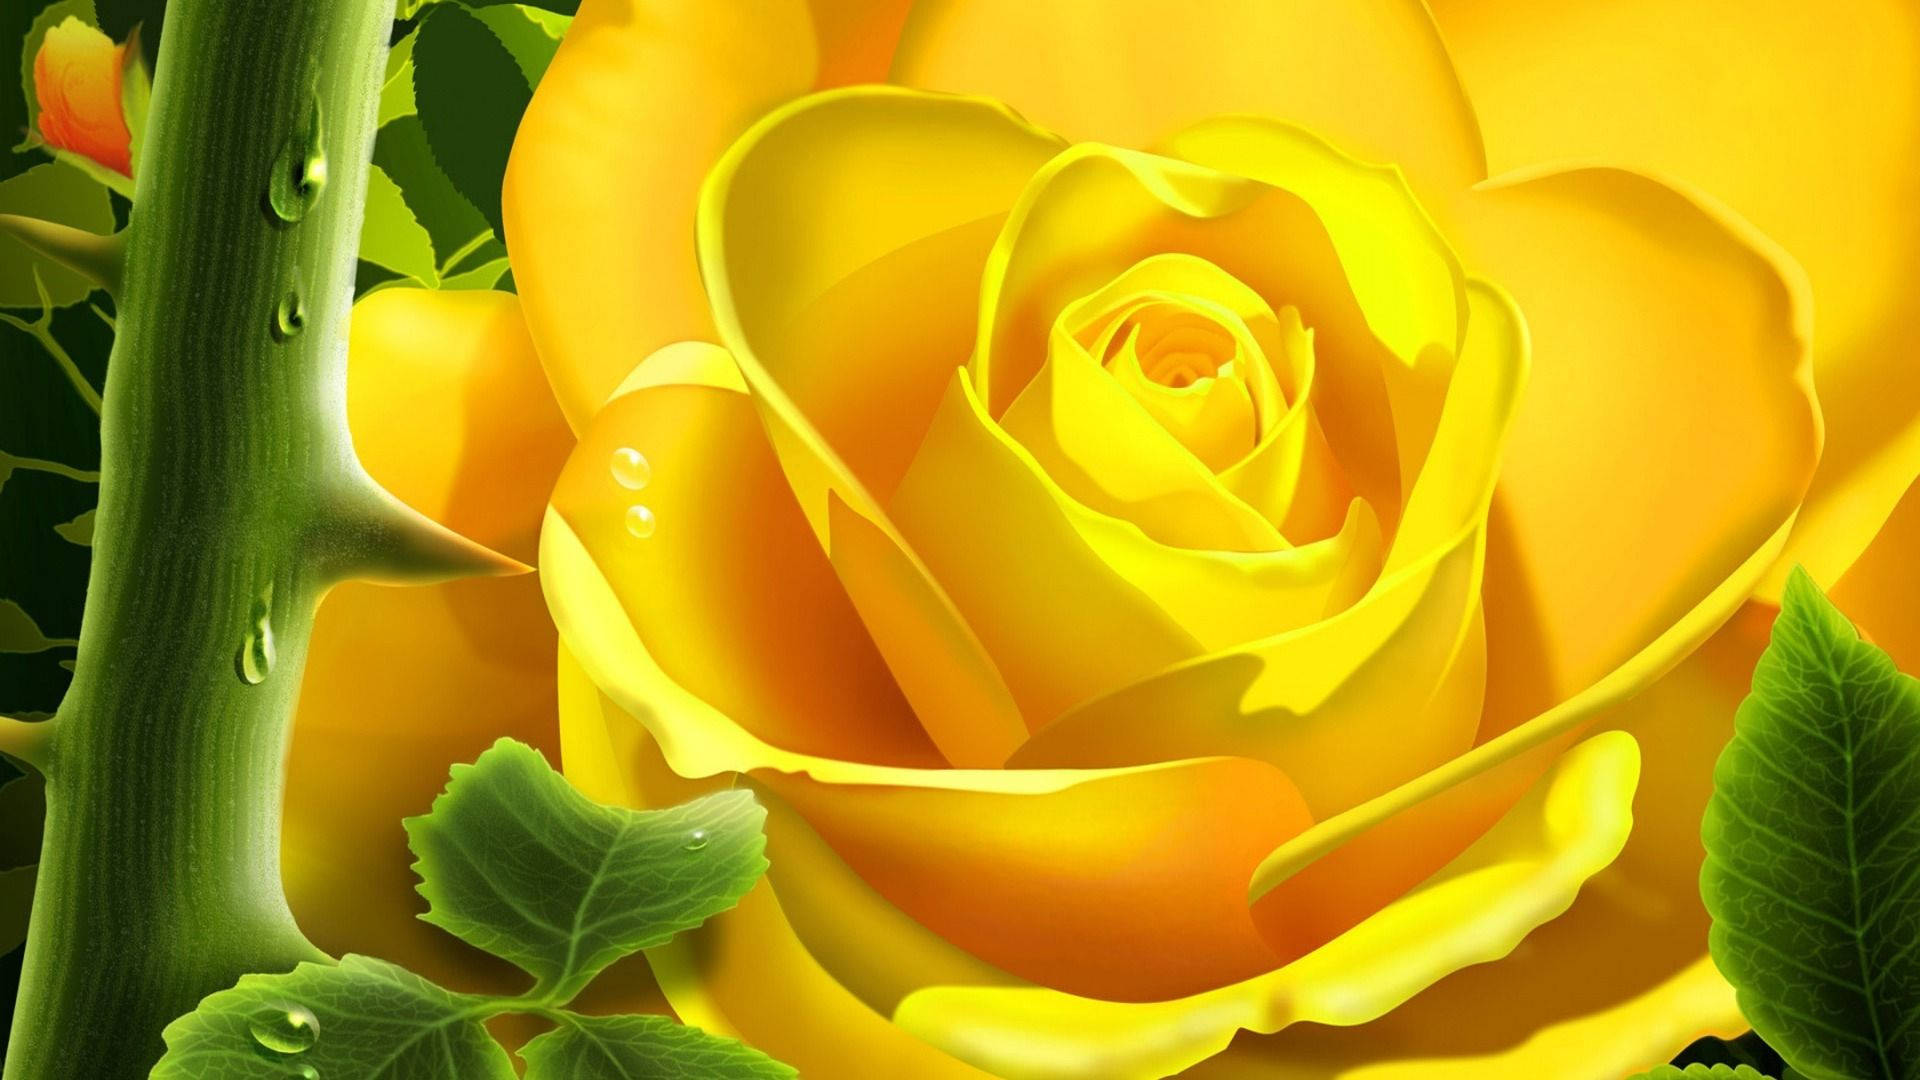 Pastel Yellow Rose Digital Painting Wallpaper